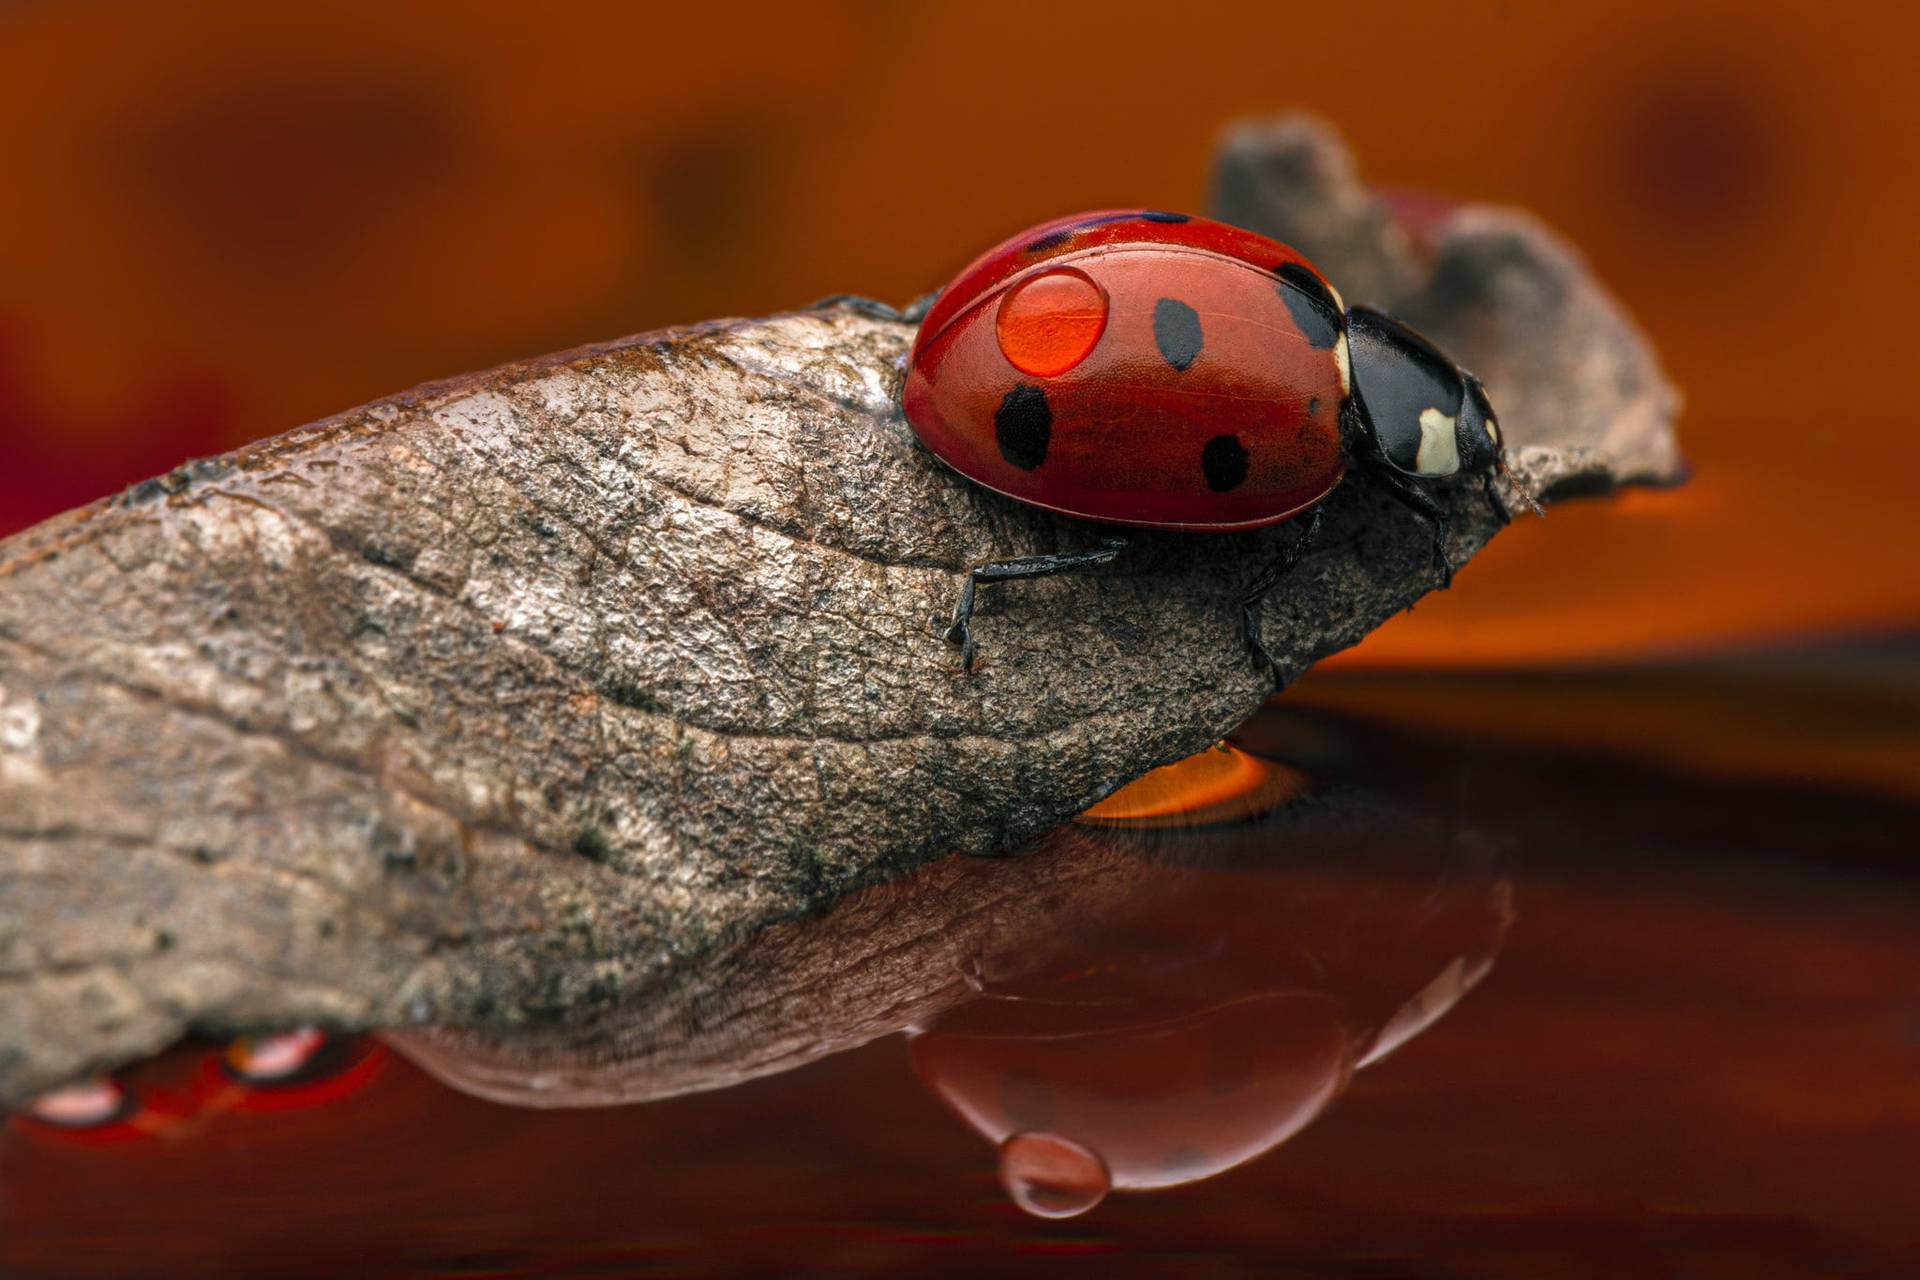 Ladybug Riding A Dried Leaf Background